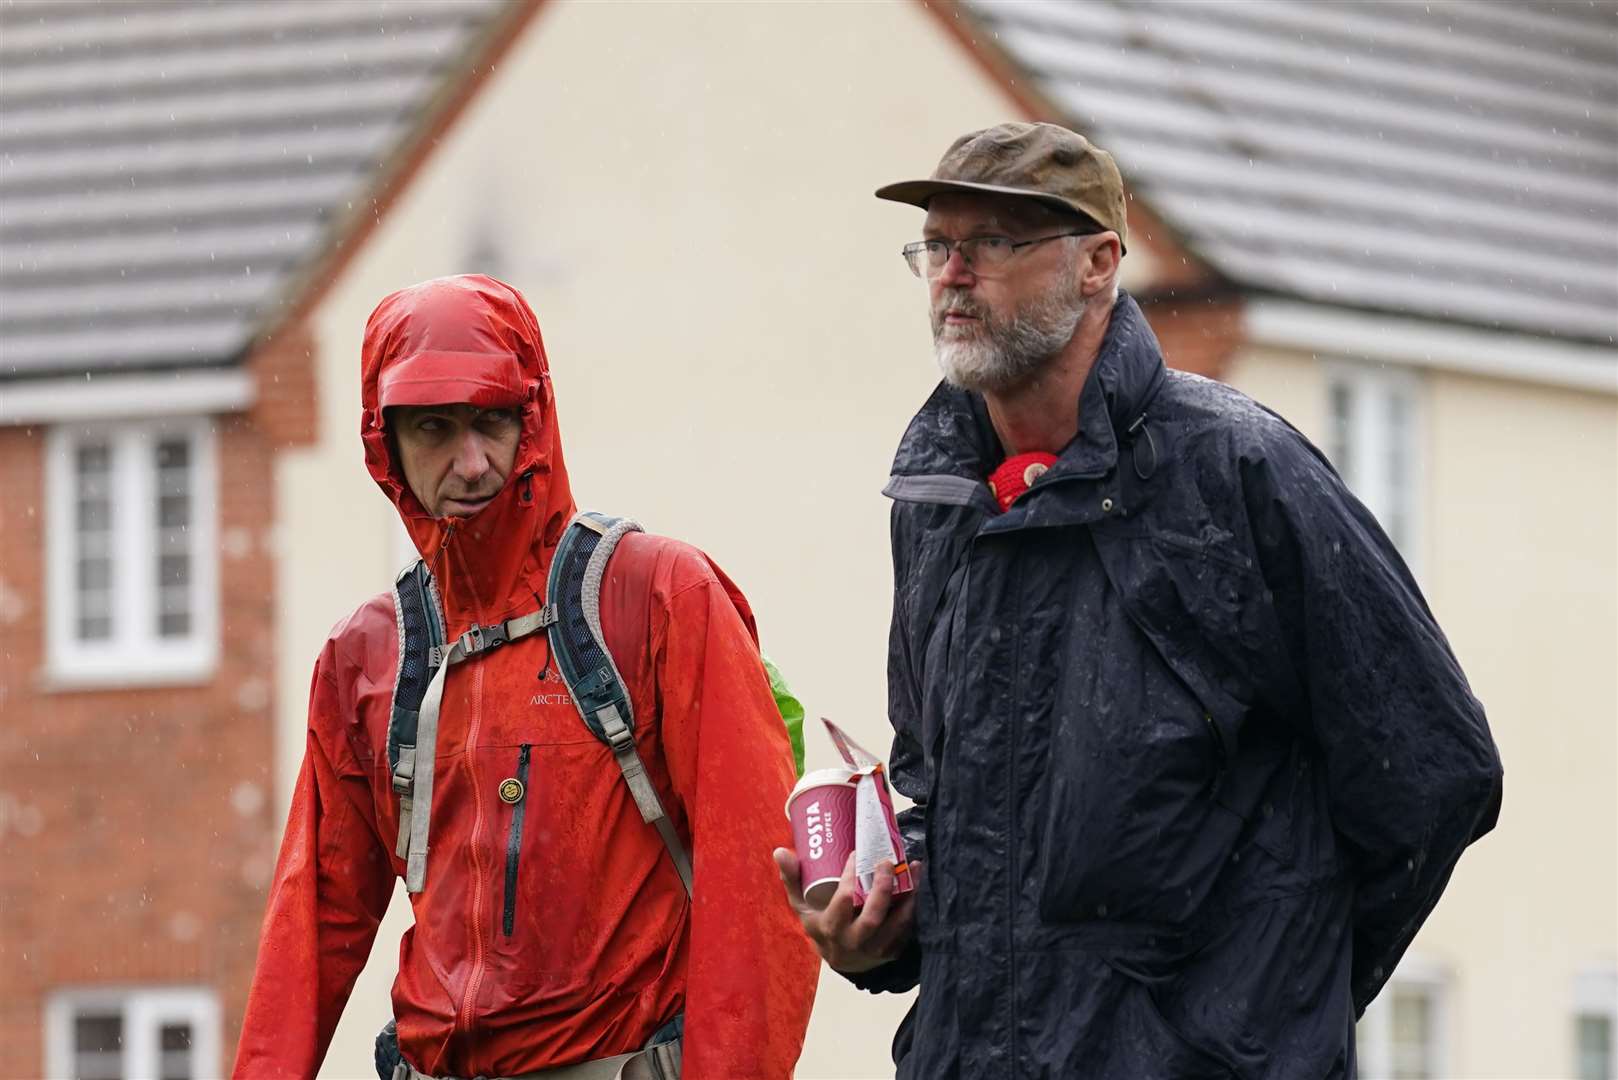 Murdered MP Jo Cox’s husband Brendan Cox (left) joined the walk on Tuesday (Joe Giddens/PA)